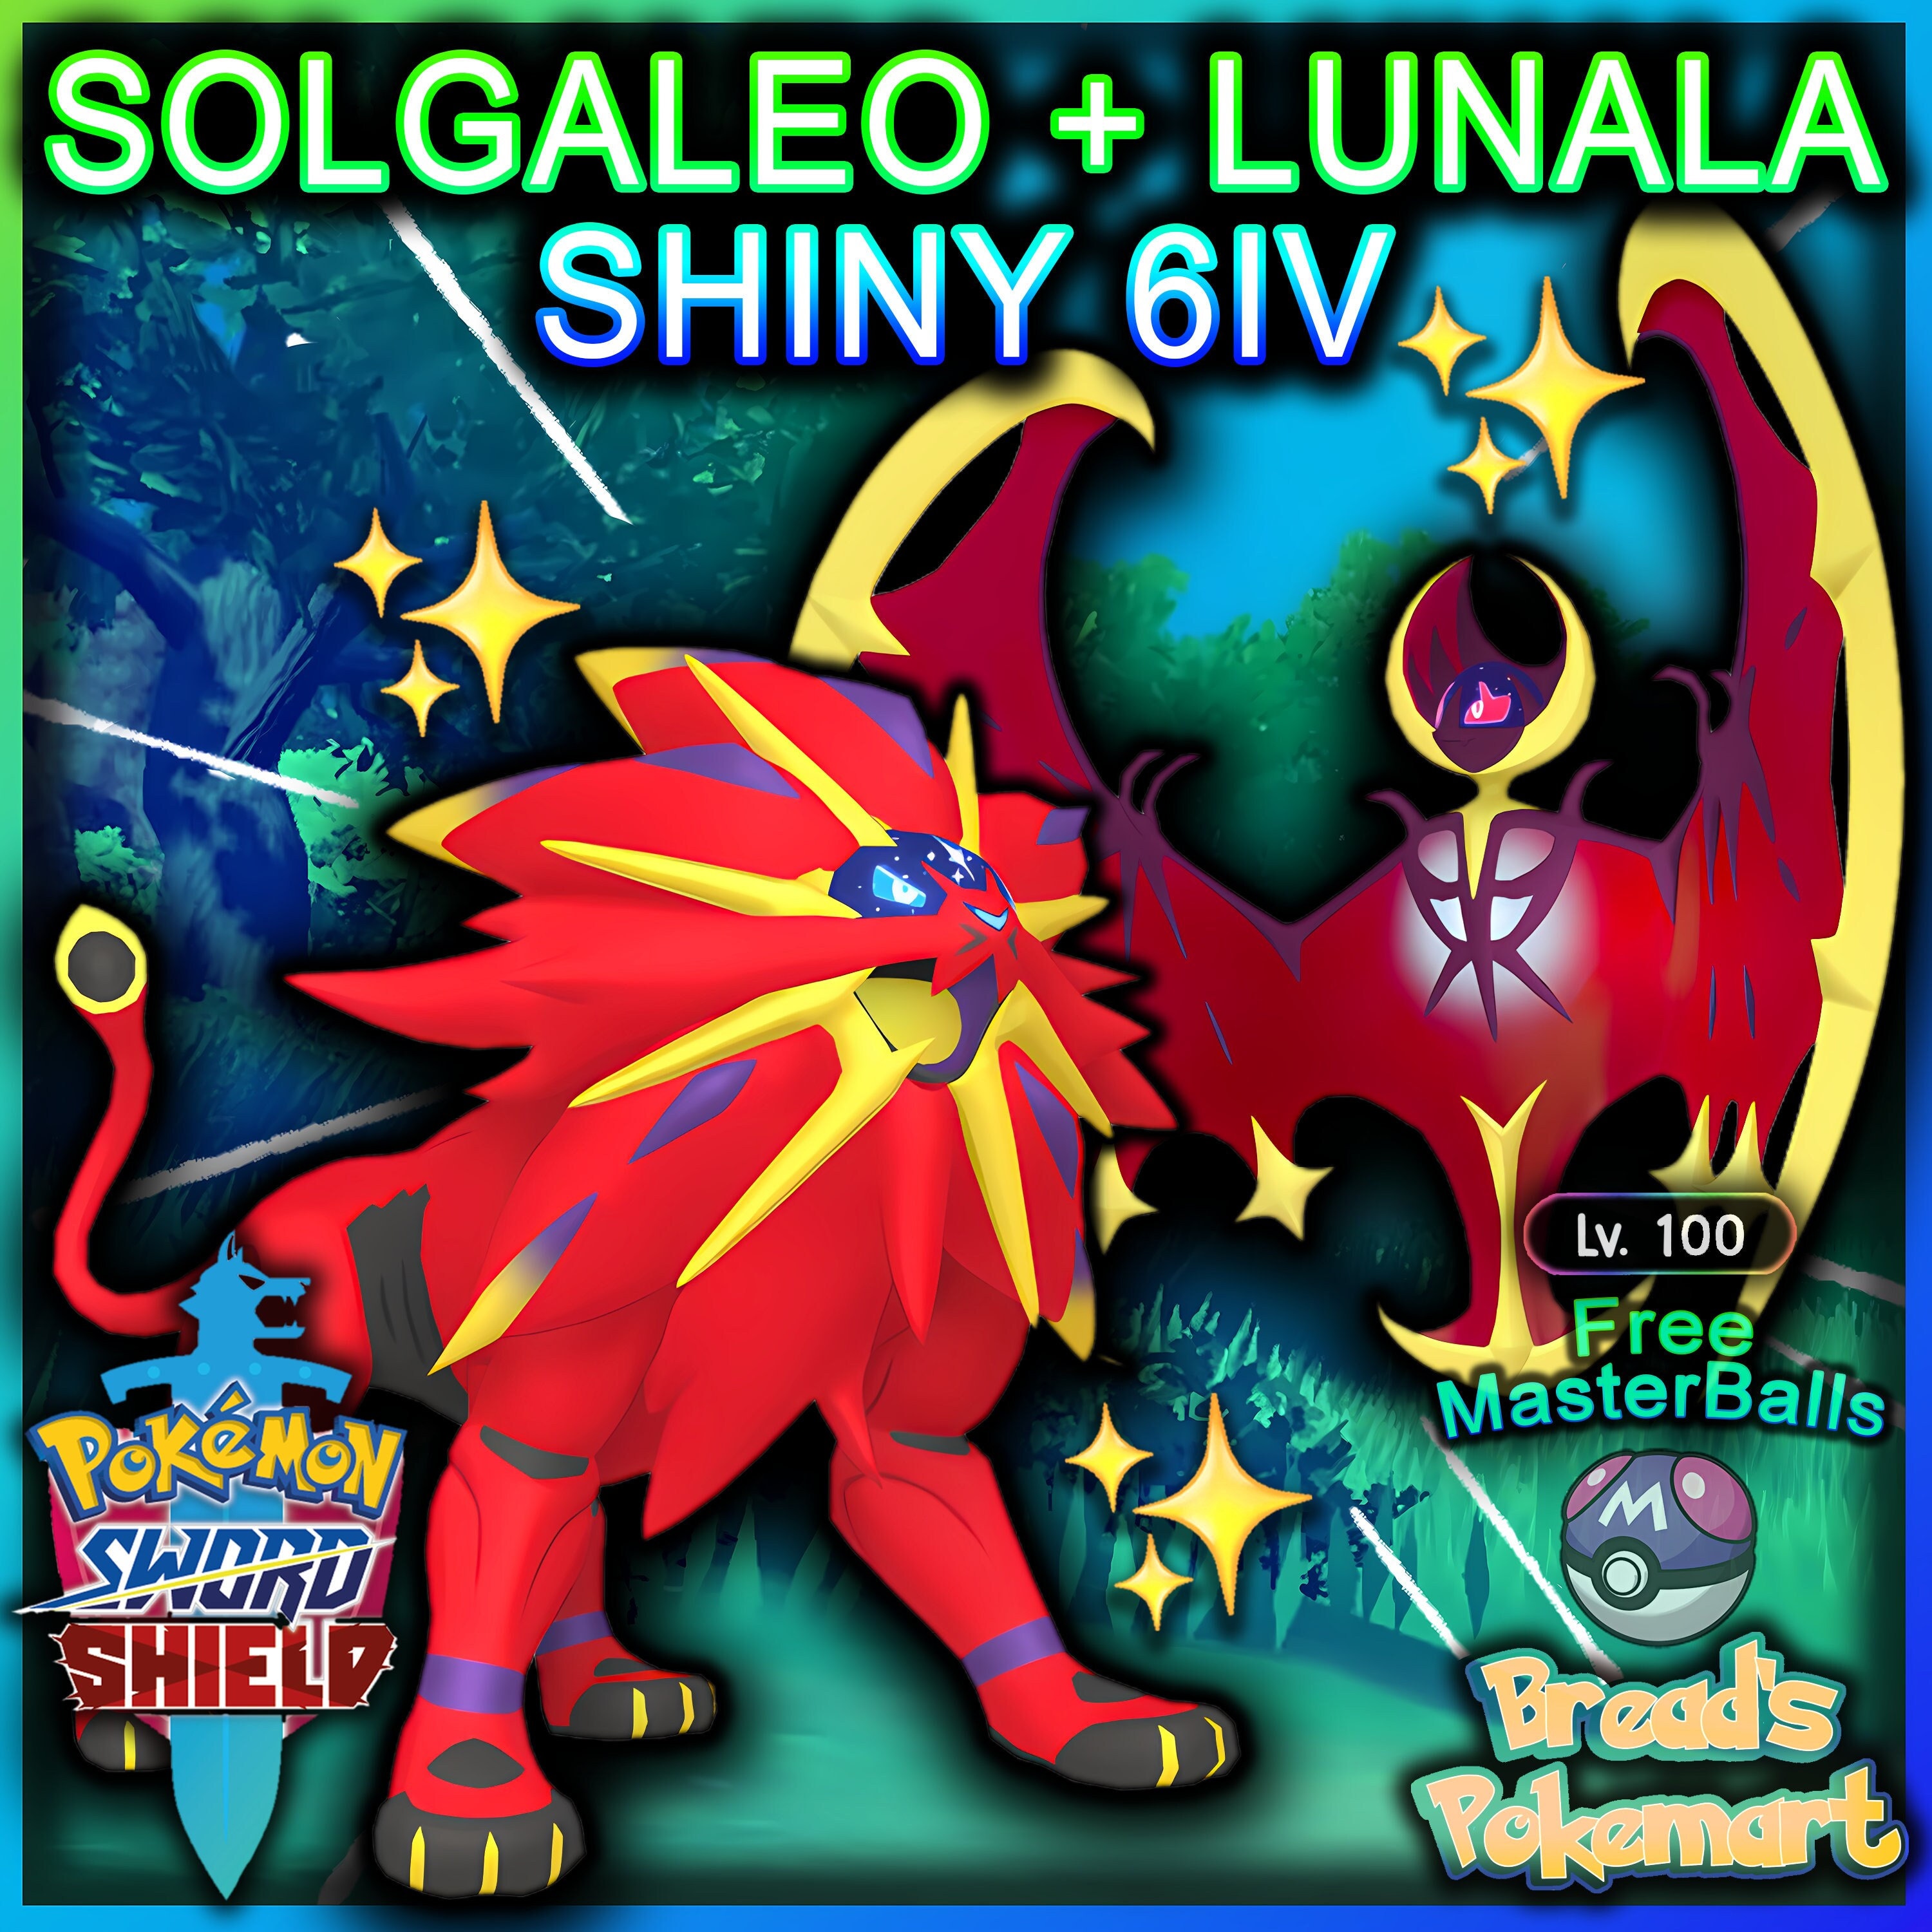 How to Get Solgaleo and Lunala in Pokemon GO